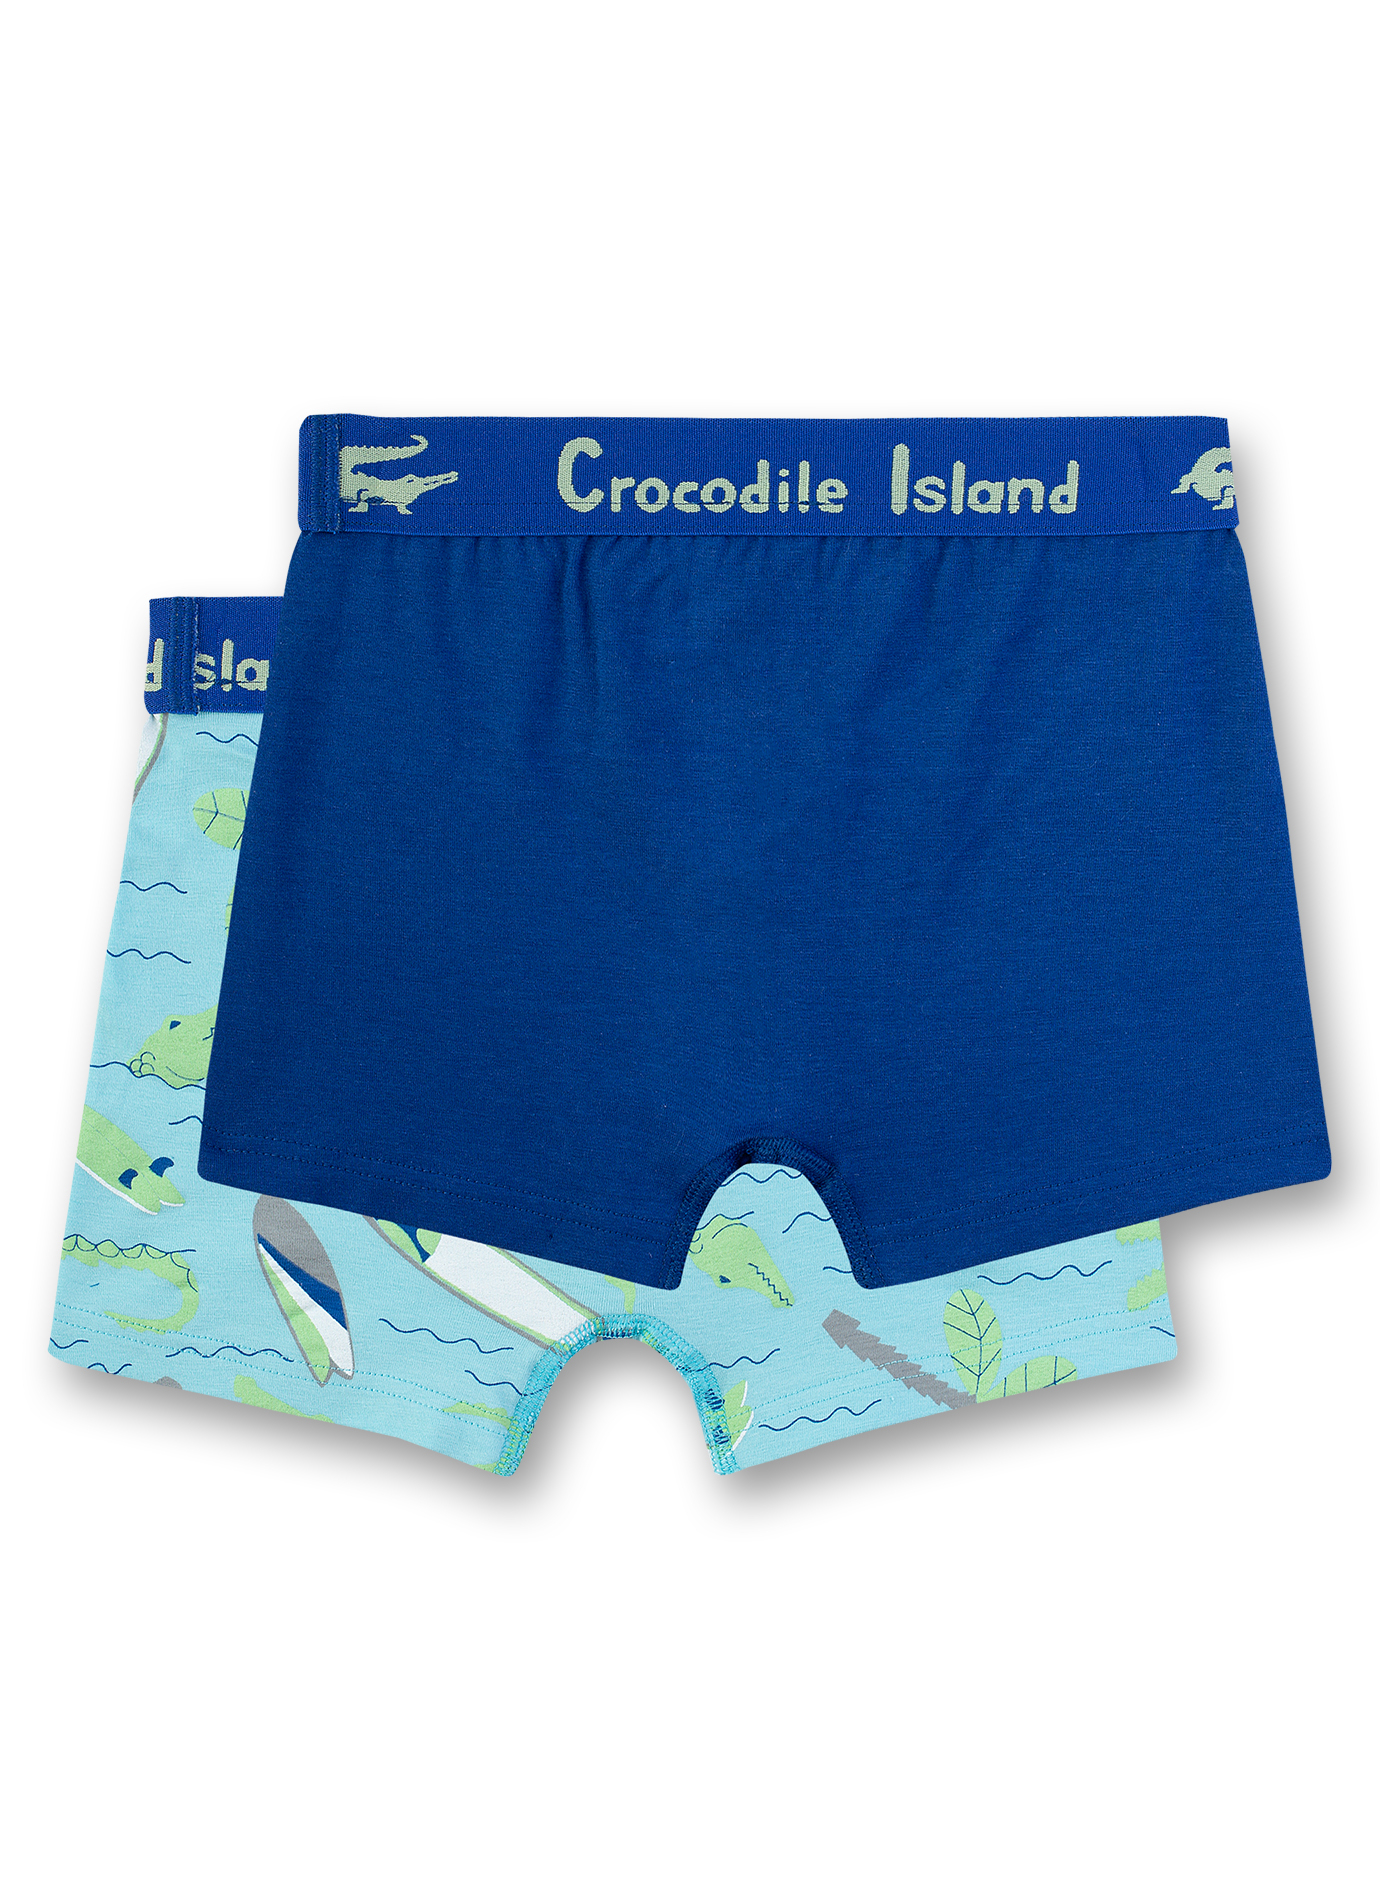 Jungen-Shorts (Doppelpack) Blau und Hellblau Crocodile Island